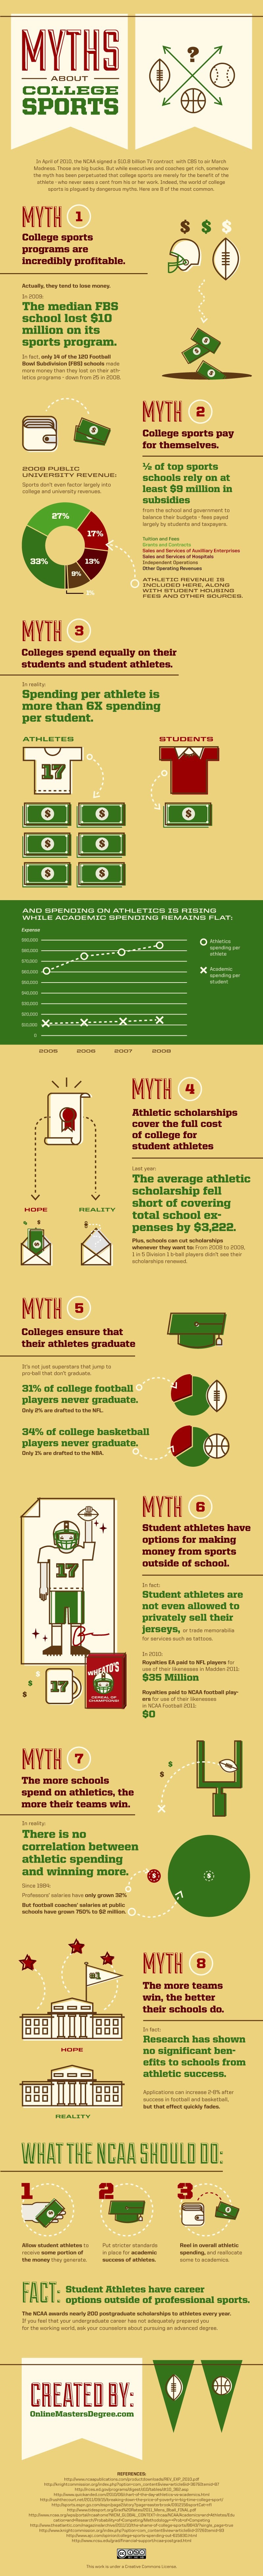 myths college sports